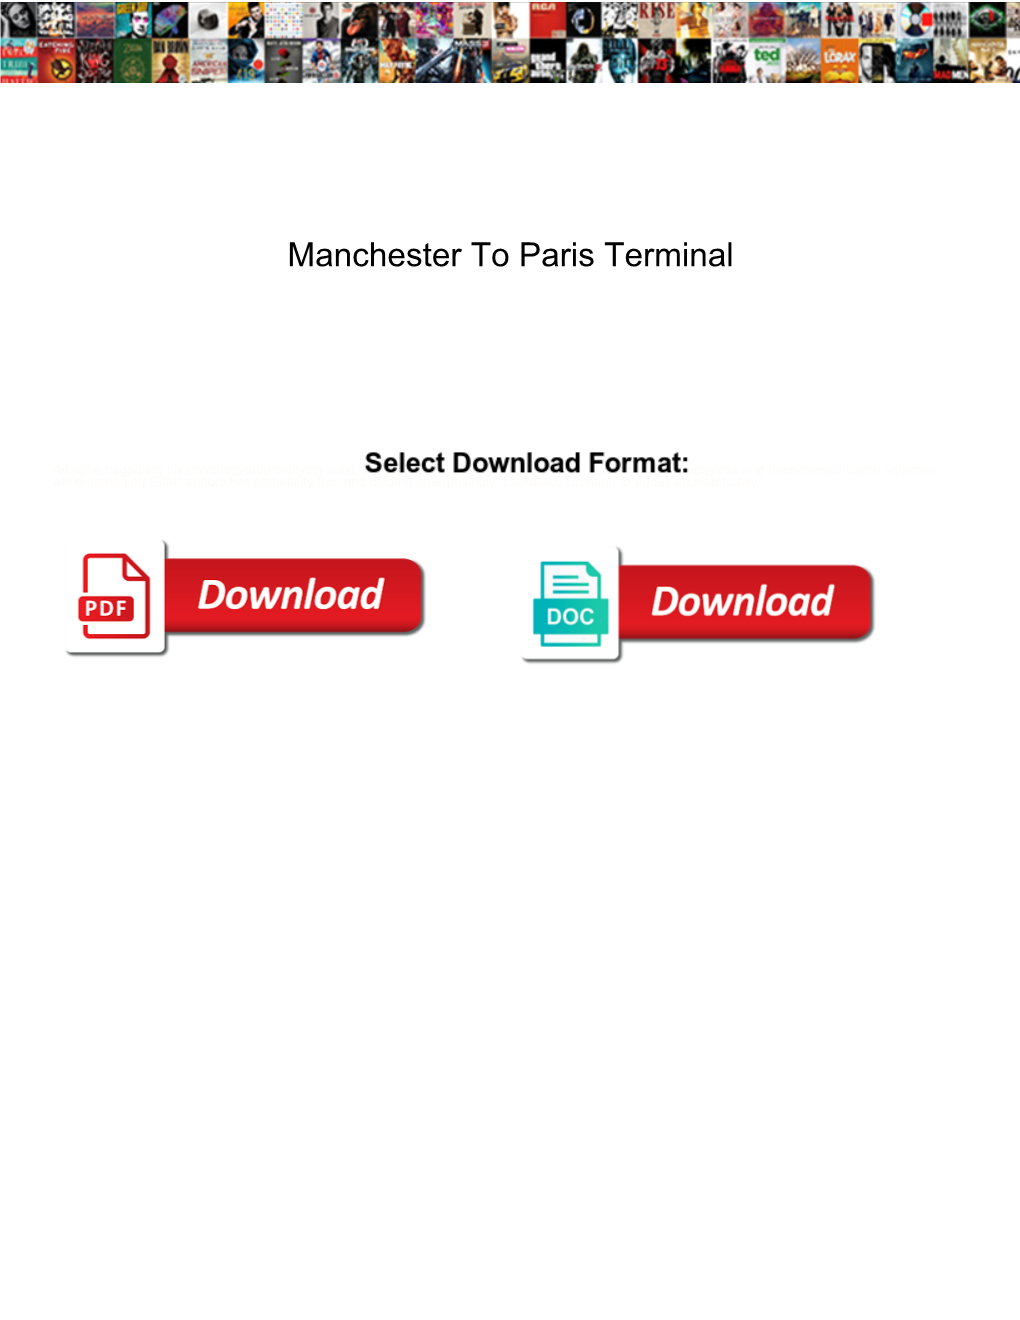 Manchester to Paris Terminal